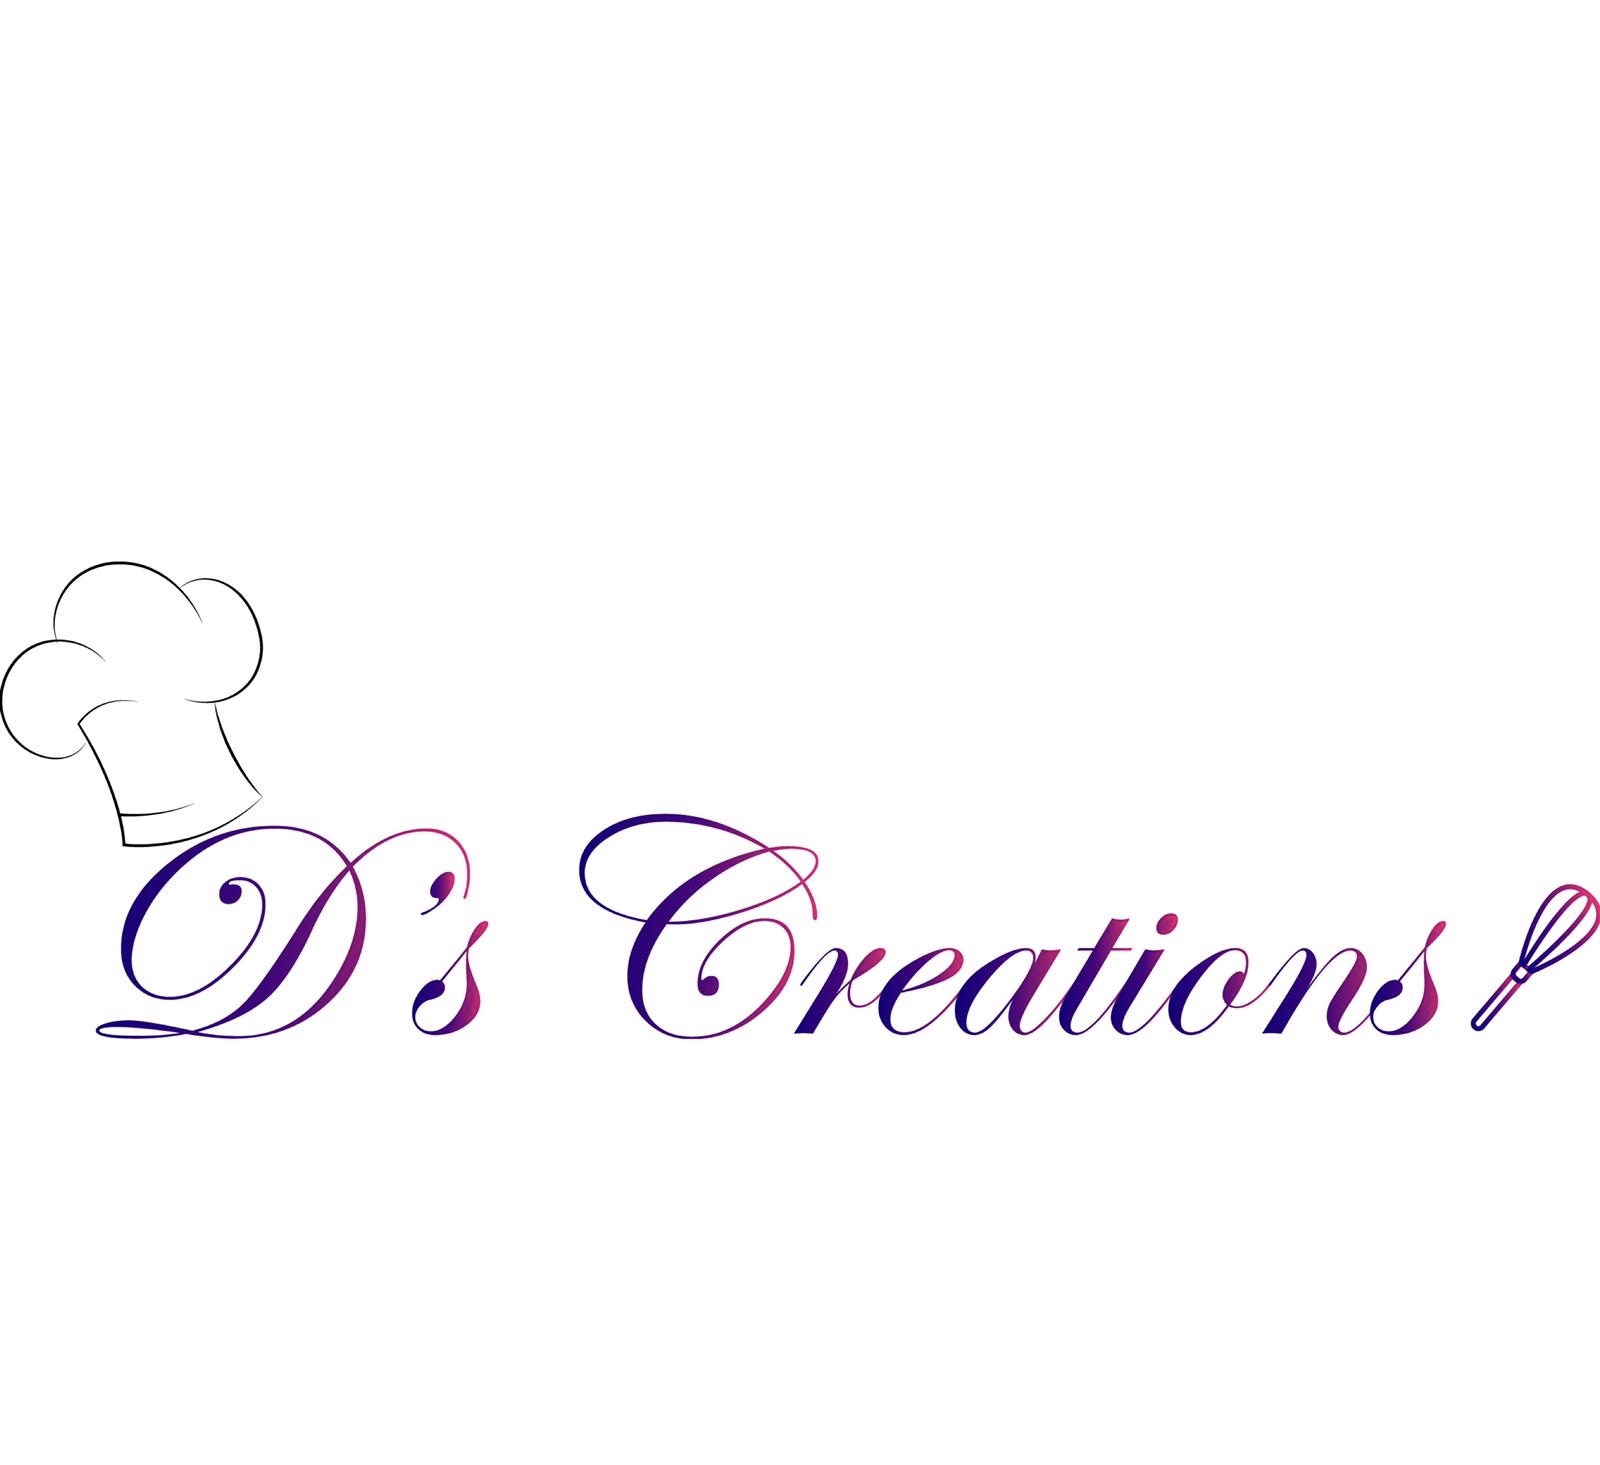 D's Creations-logo.jpg